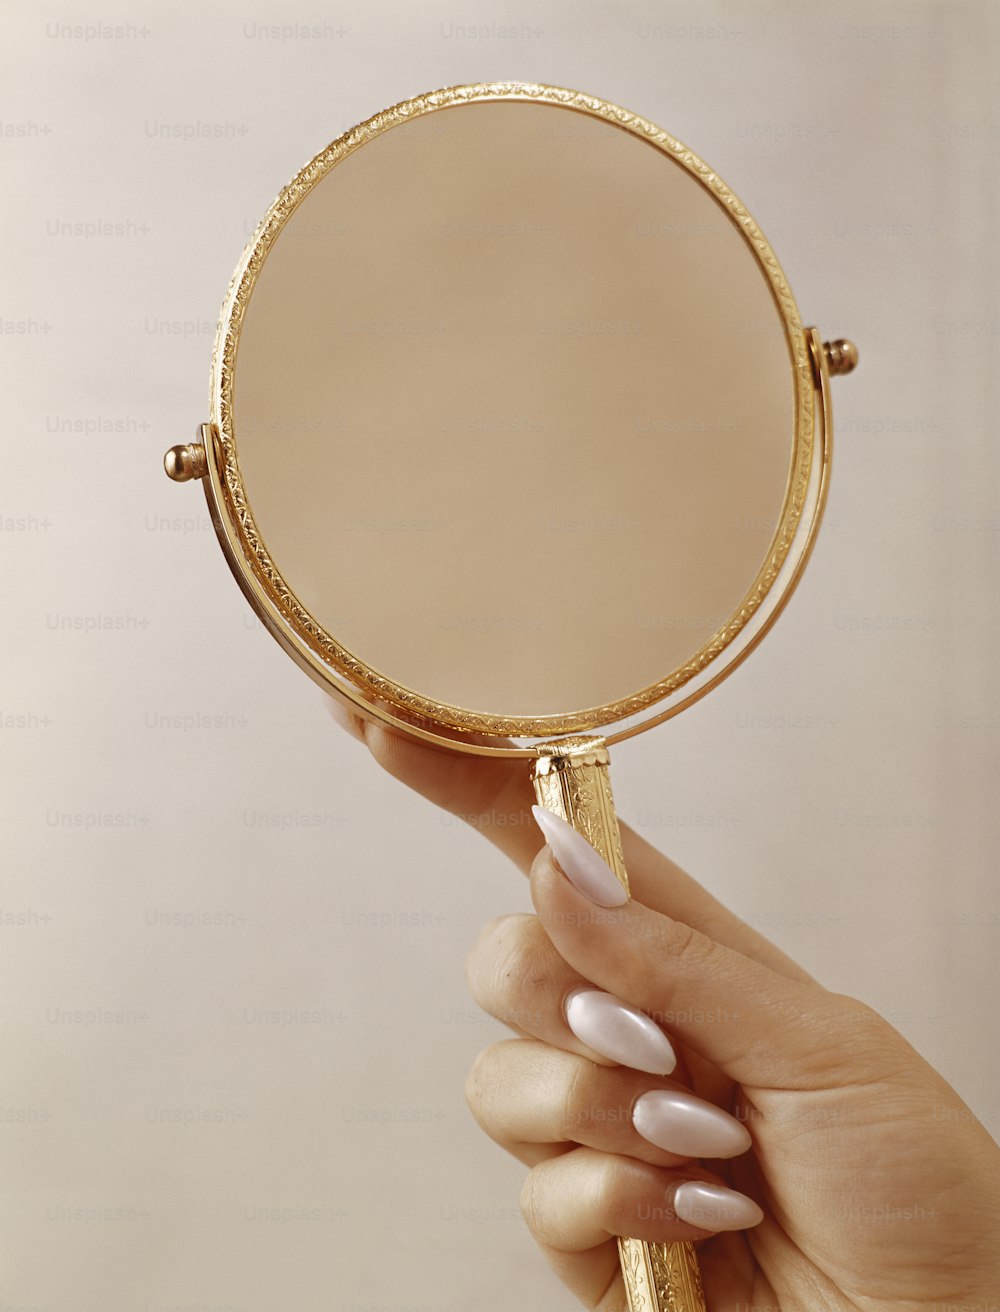 una persona sosteniendo un espejo con la mano